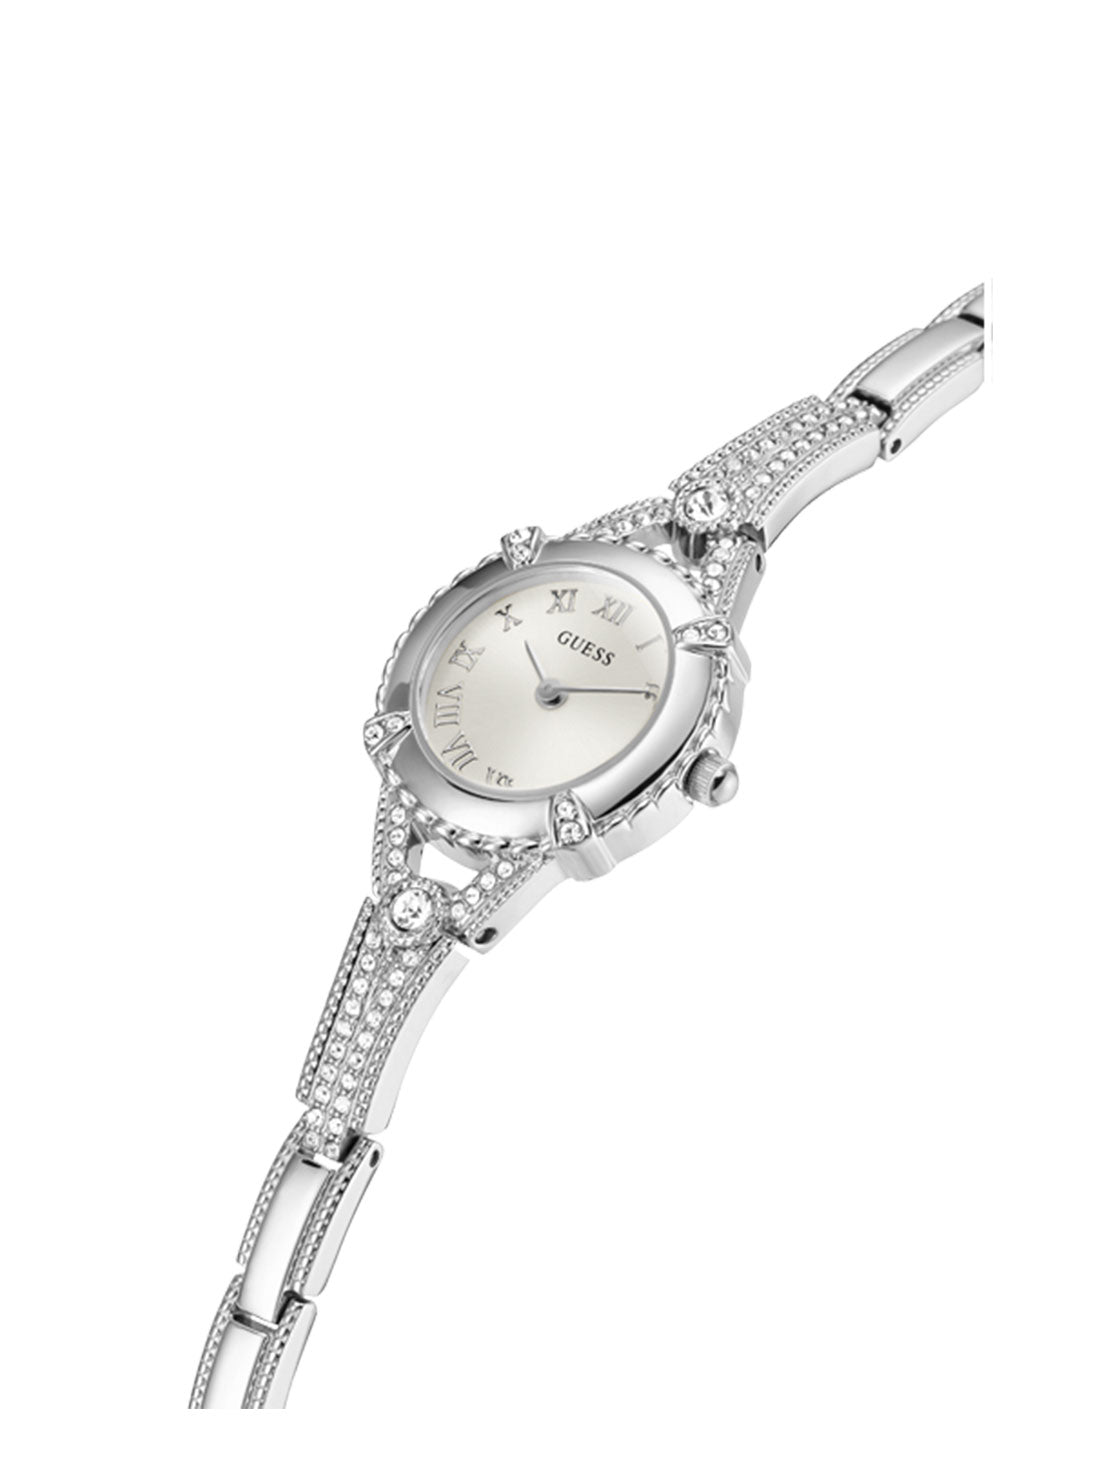 GUESS Women's Silver Angelic Glitz Watch W0135L1 Angle View